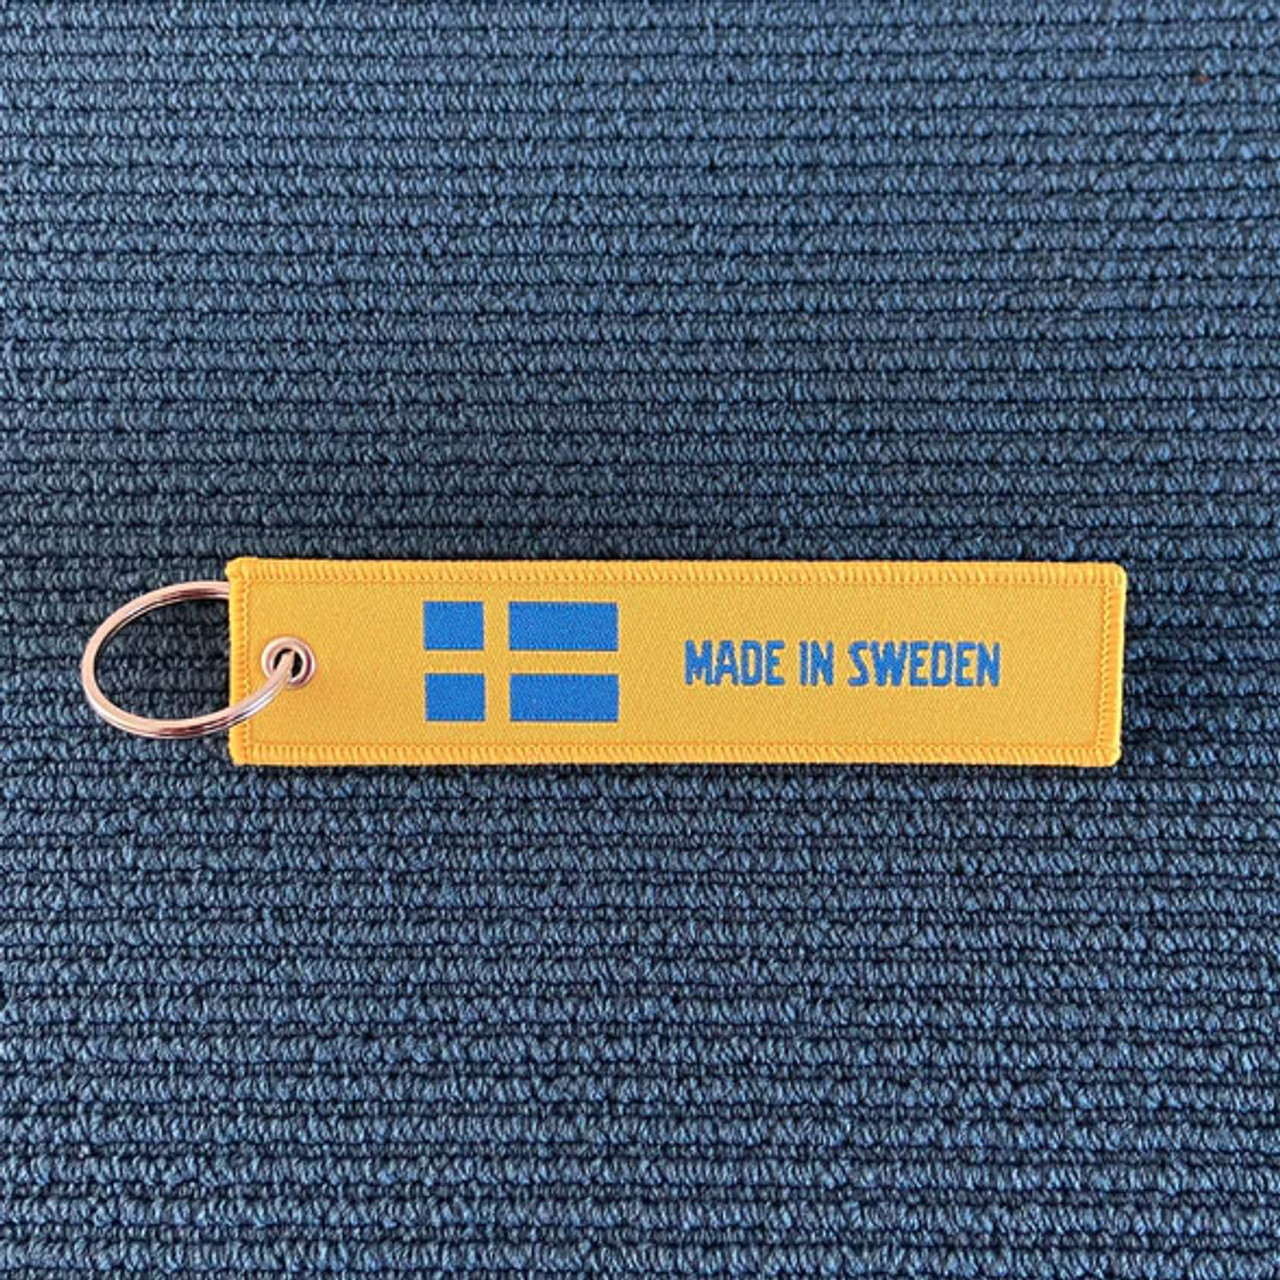 Sweden Jet Tag Key Chains